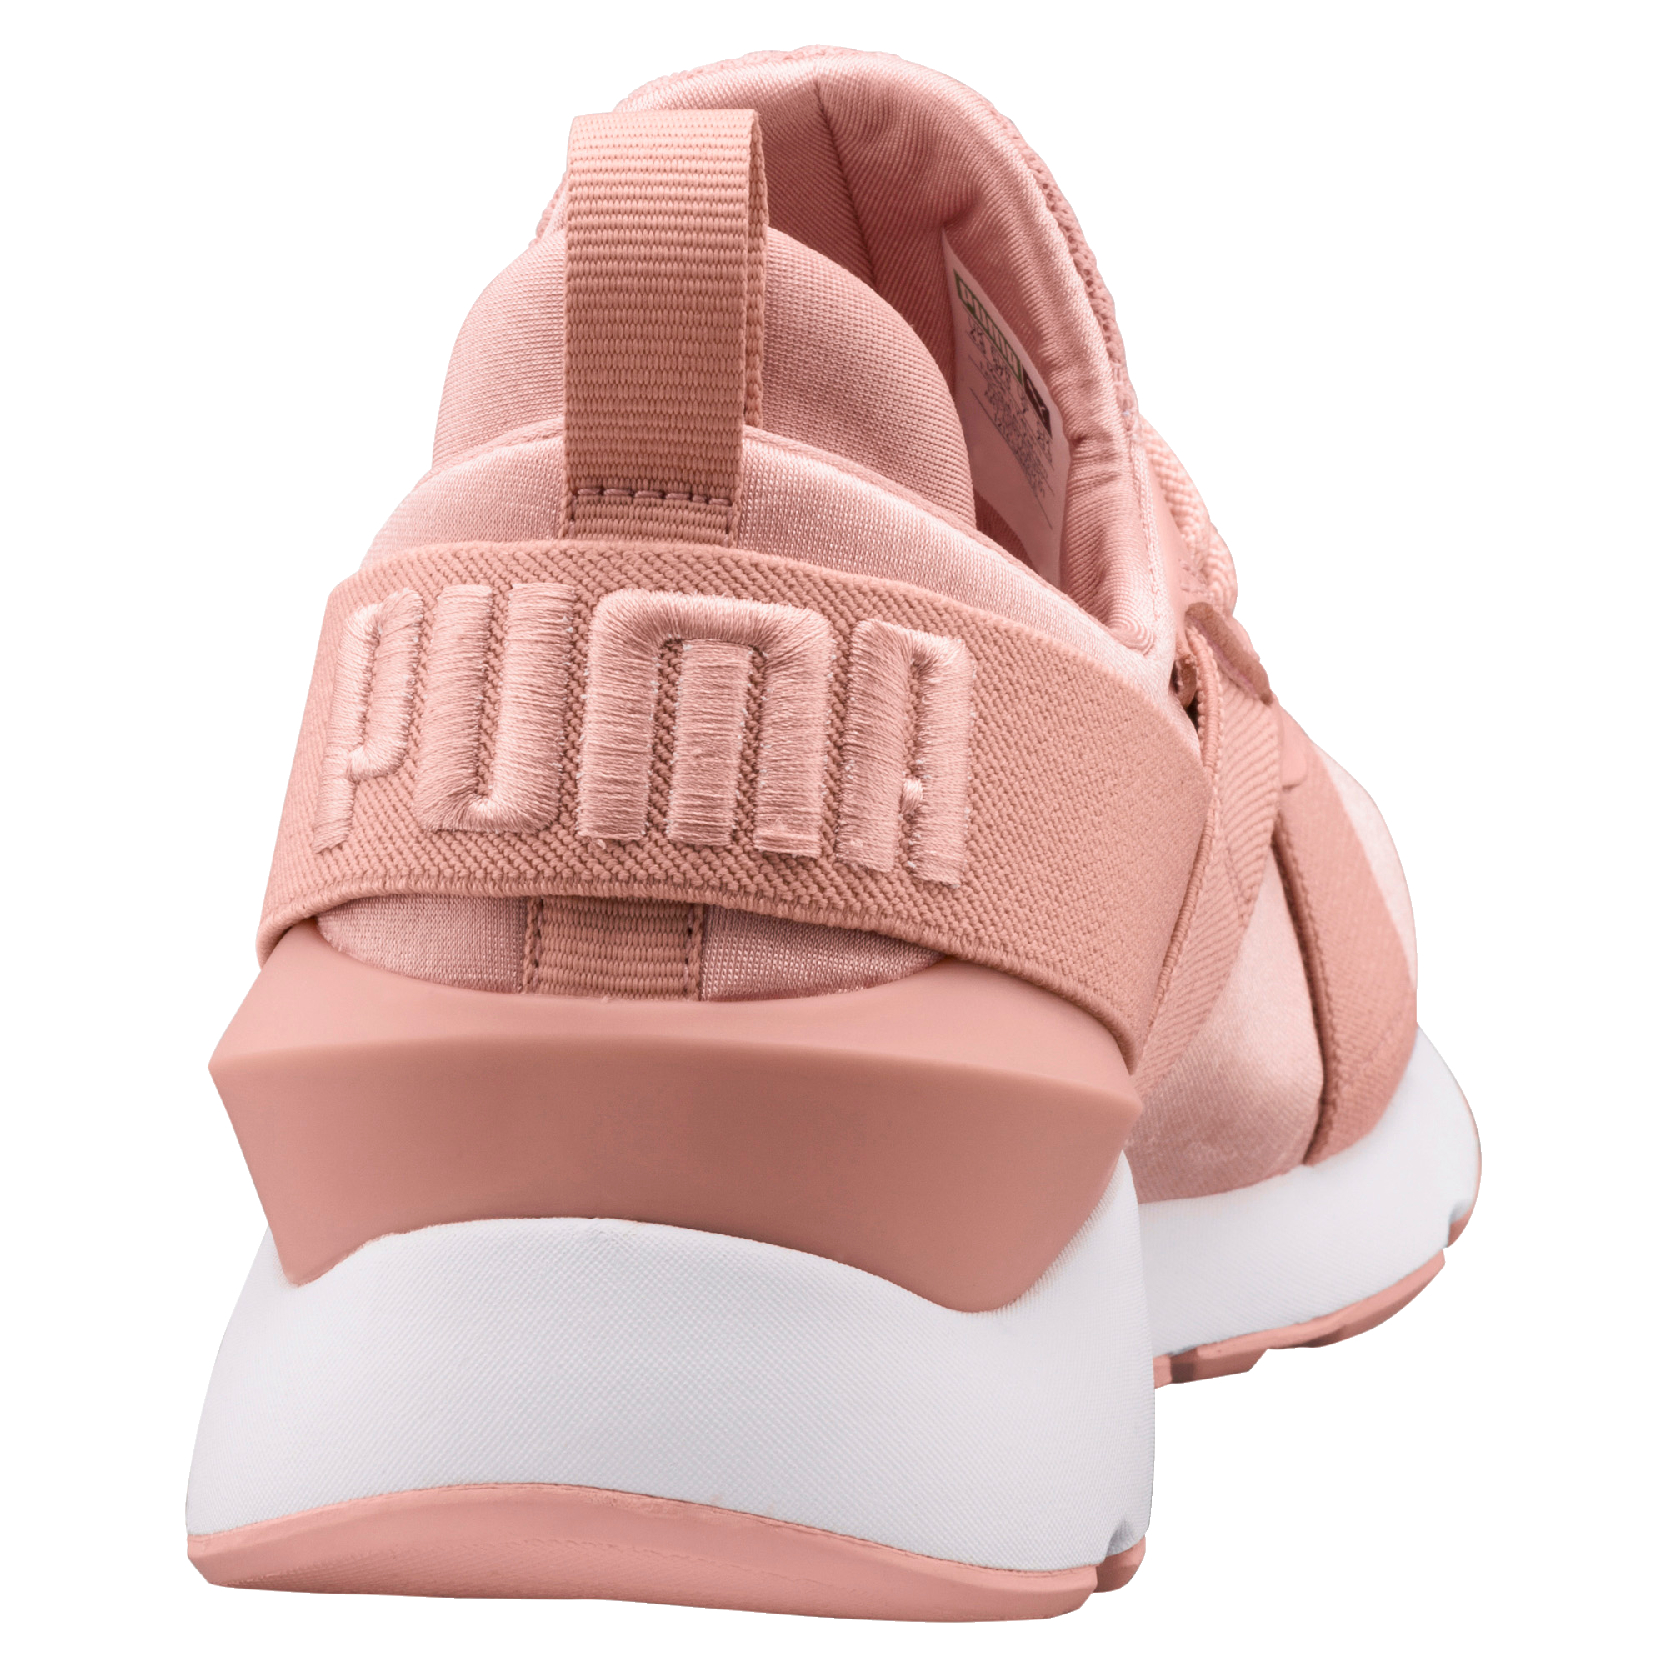 puma 2018 foot locker